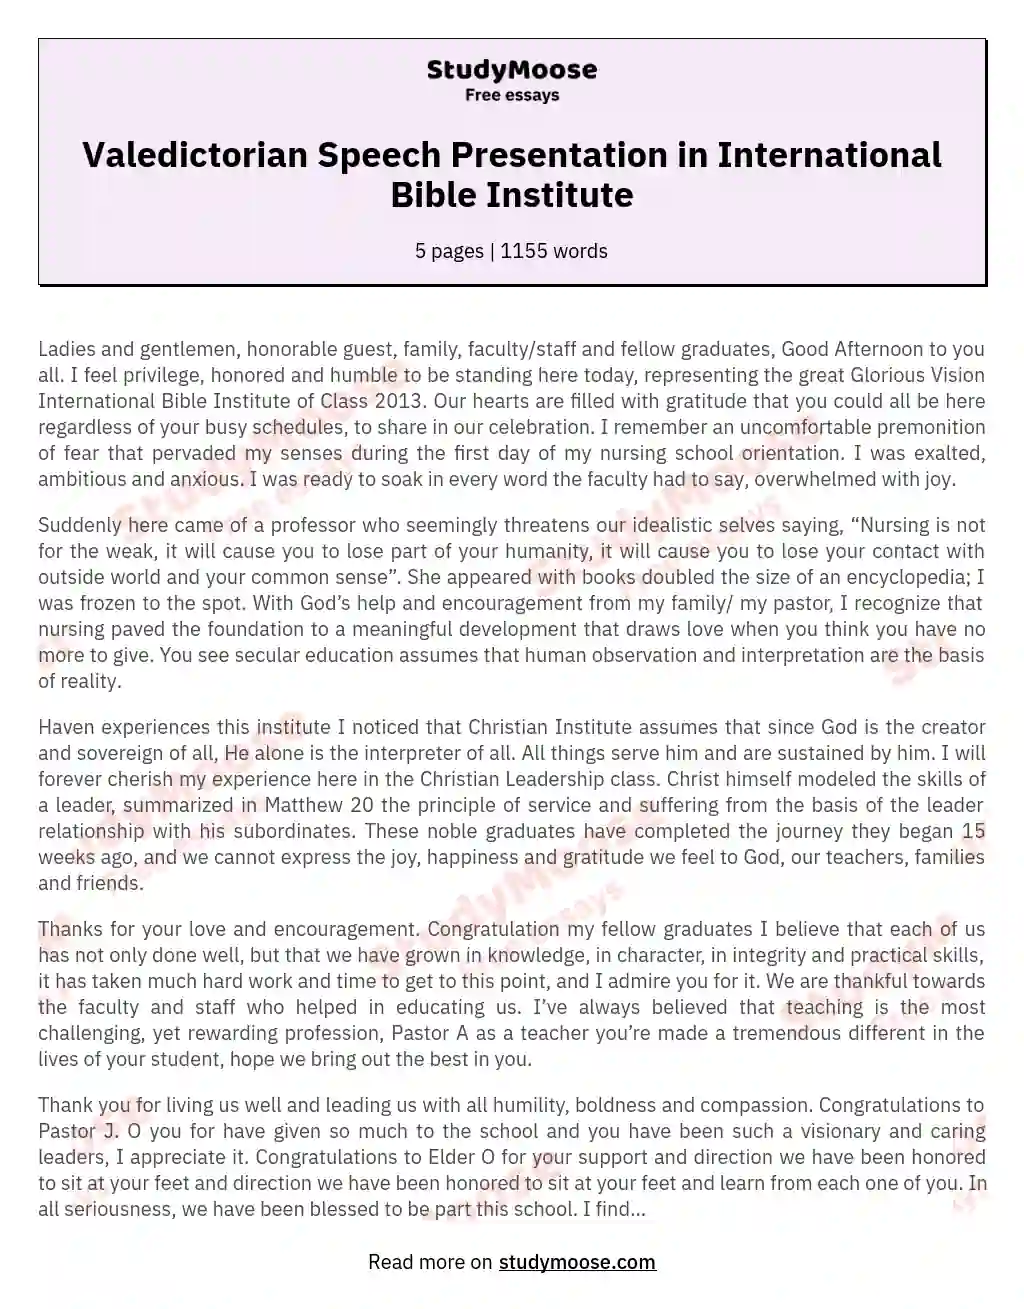 Valedictorian Speech Presentation in International Bible Institute